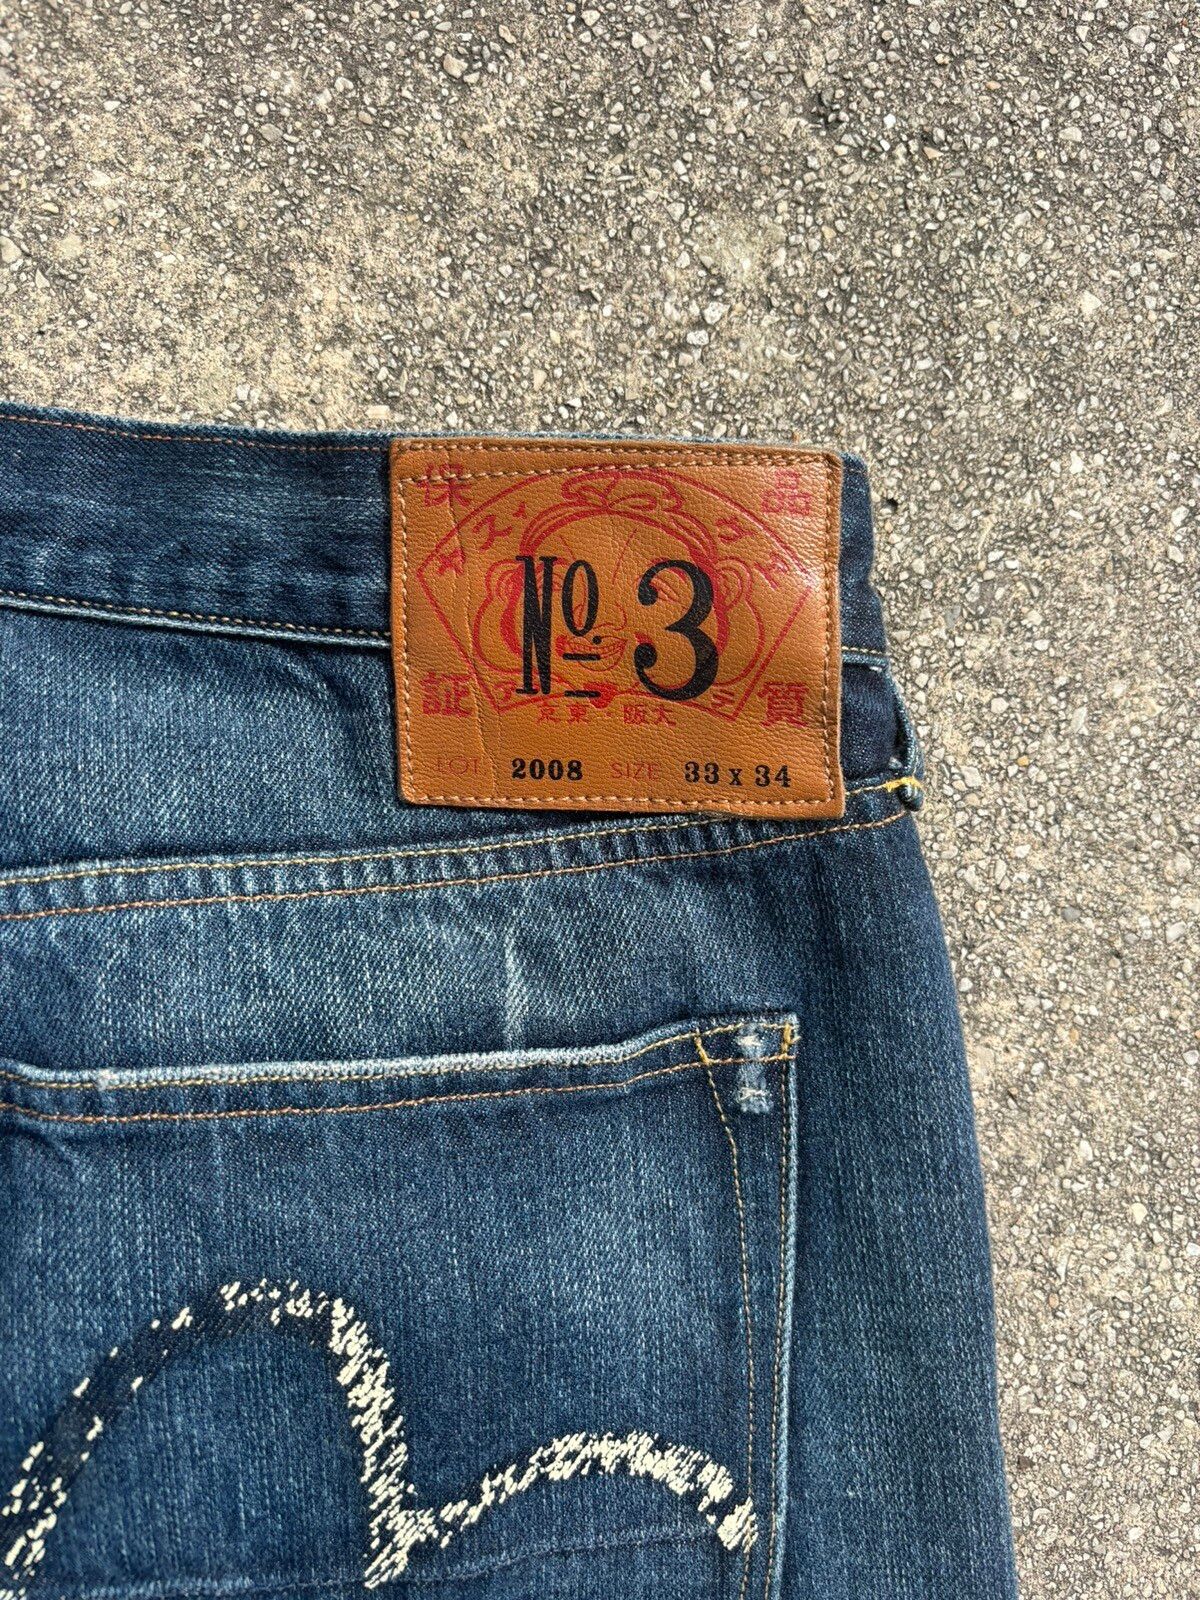 Evisu Evisu No.3 Denim Jeans Size US 33 - 3 Thumbnail